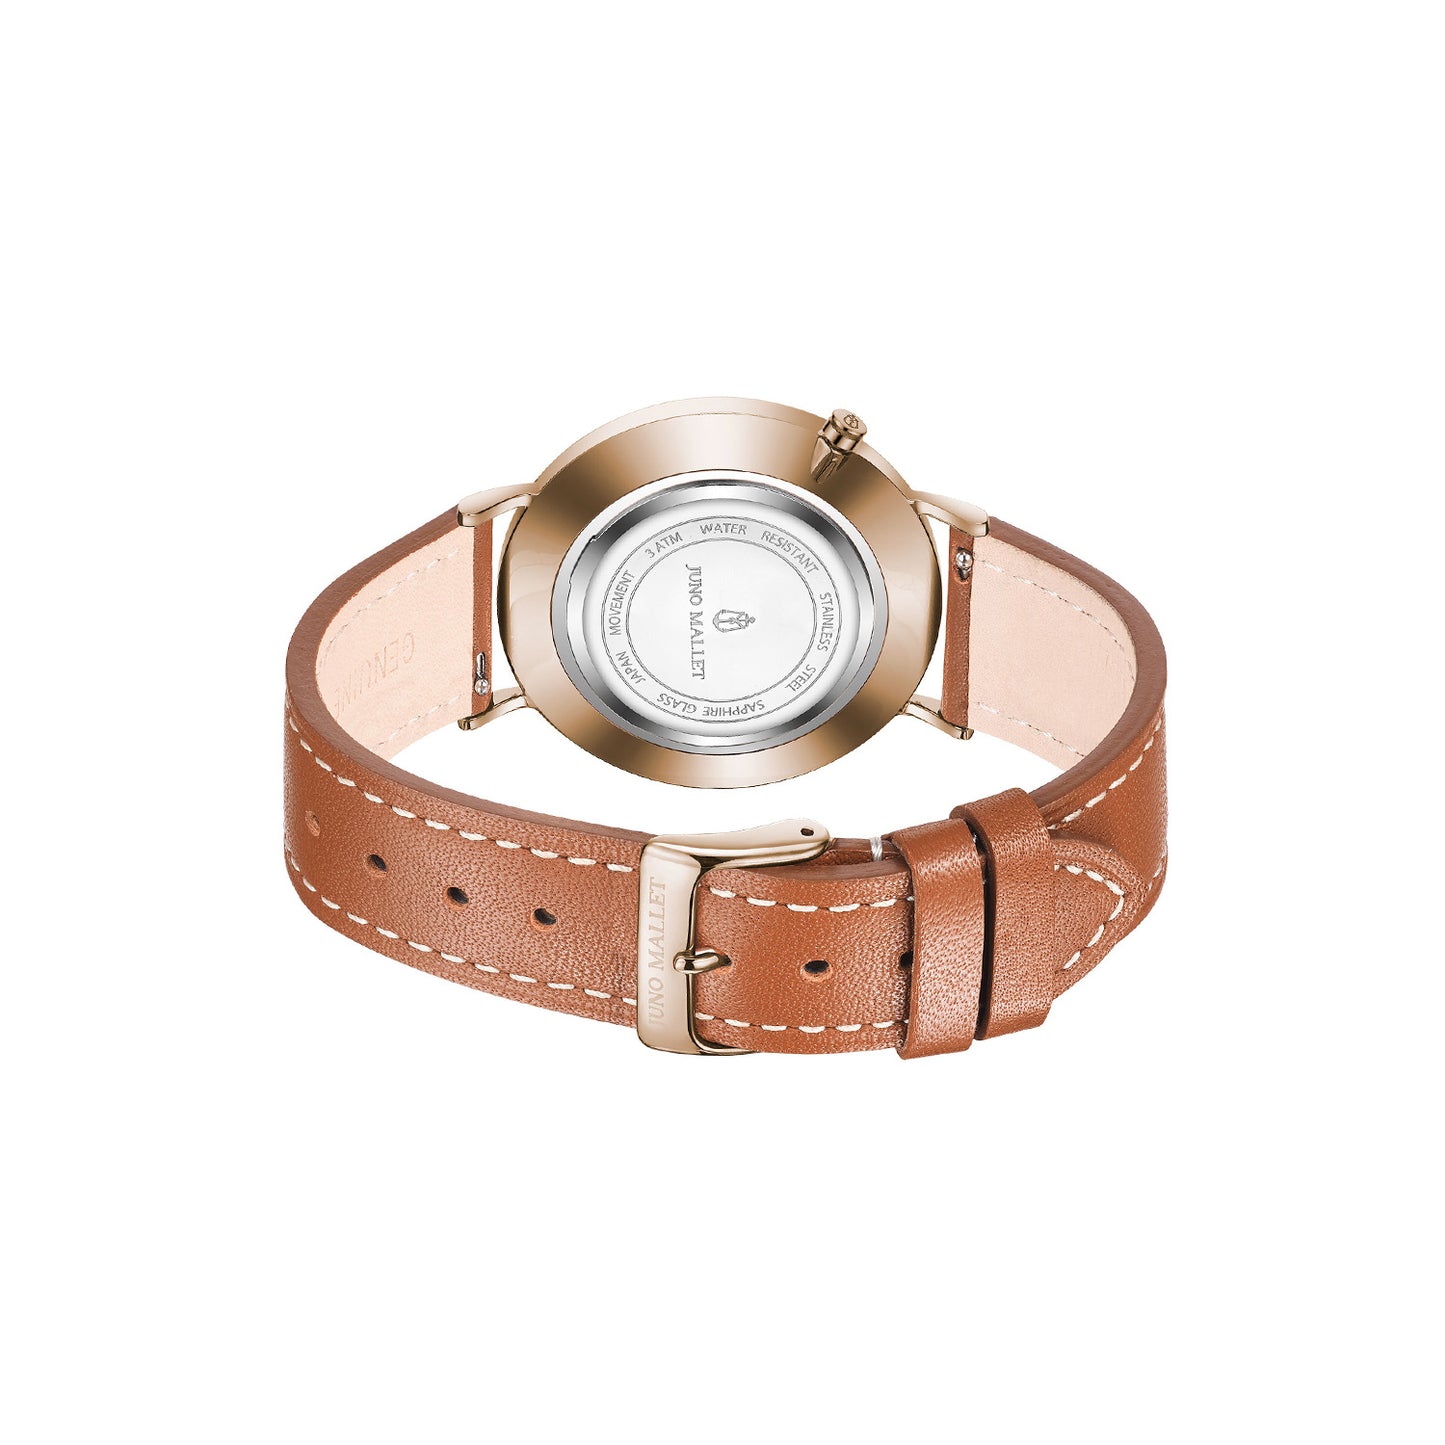 Thomas / Classic Bracelet 手錶 / 米白色 / 淺棕色 / 玫瑰金 / 40mm